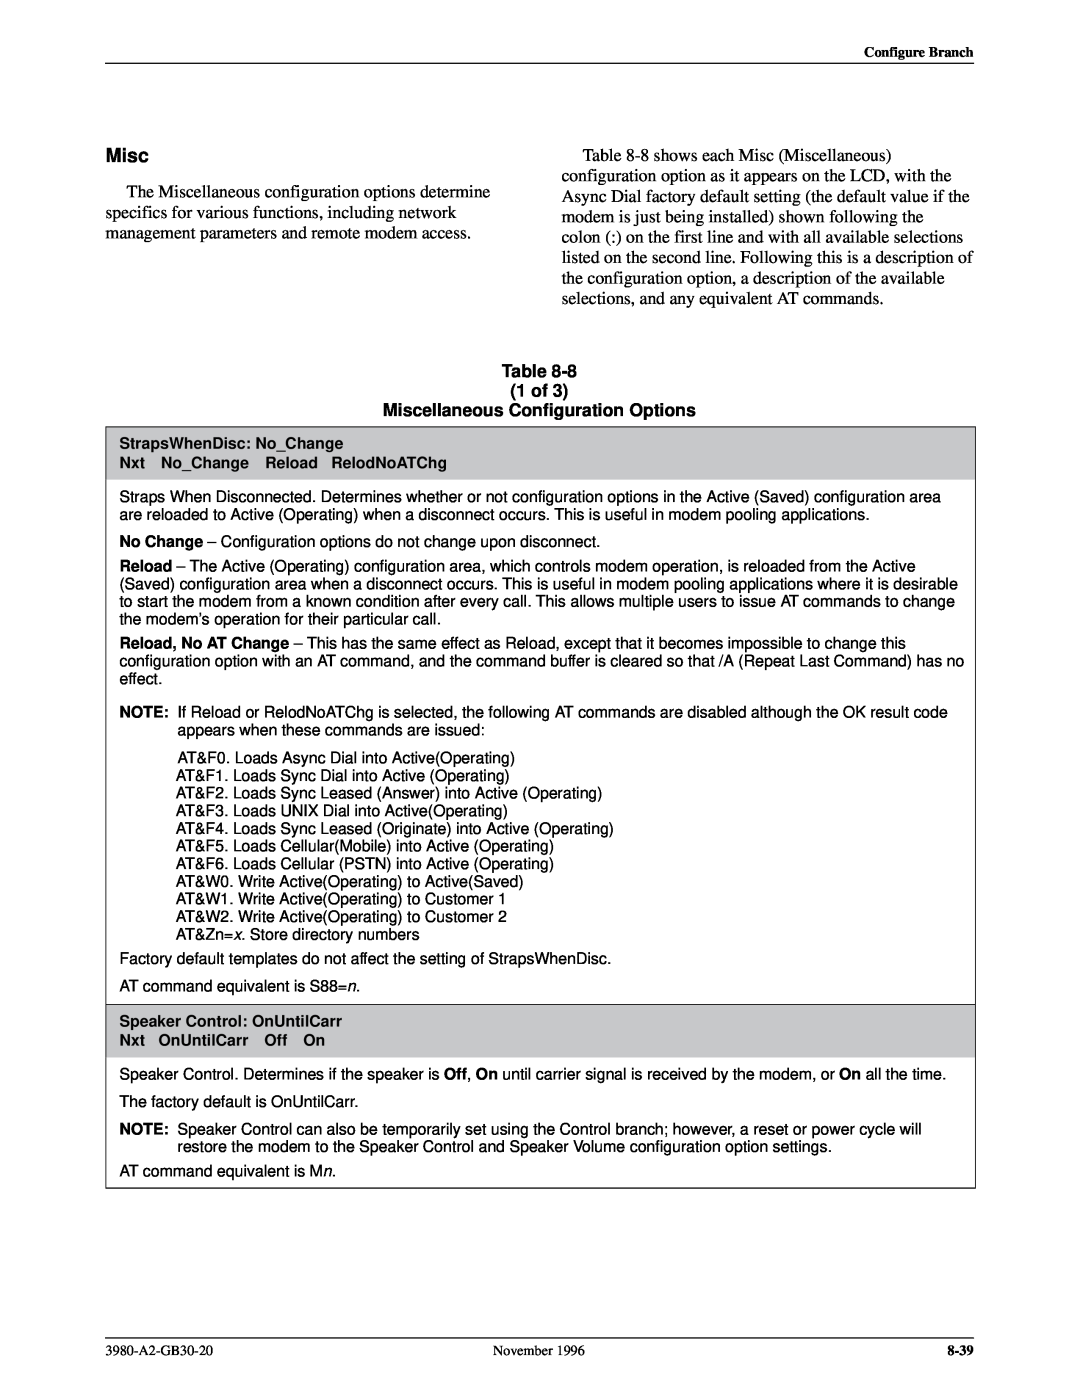 Paradyne 3800PLUS manual of Miscellaneous Configuration Options 